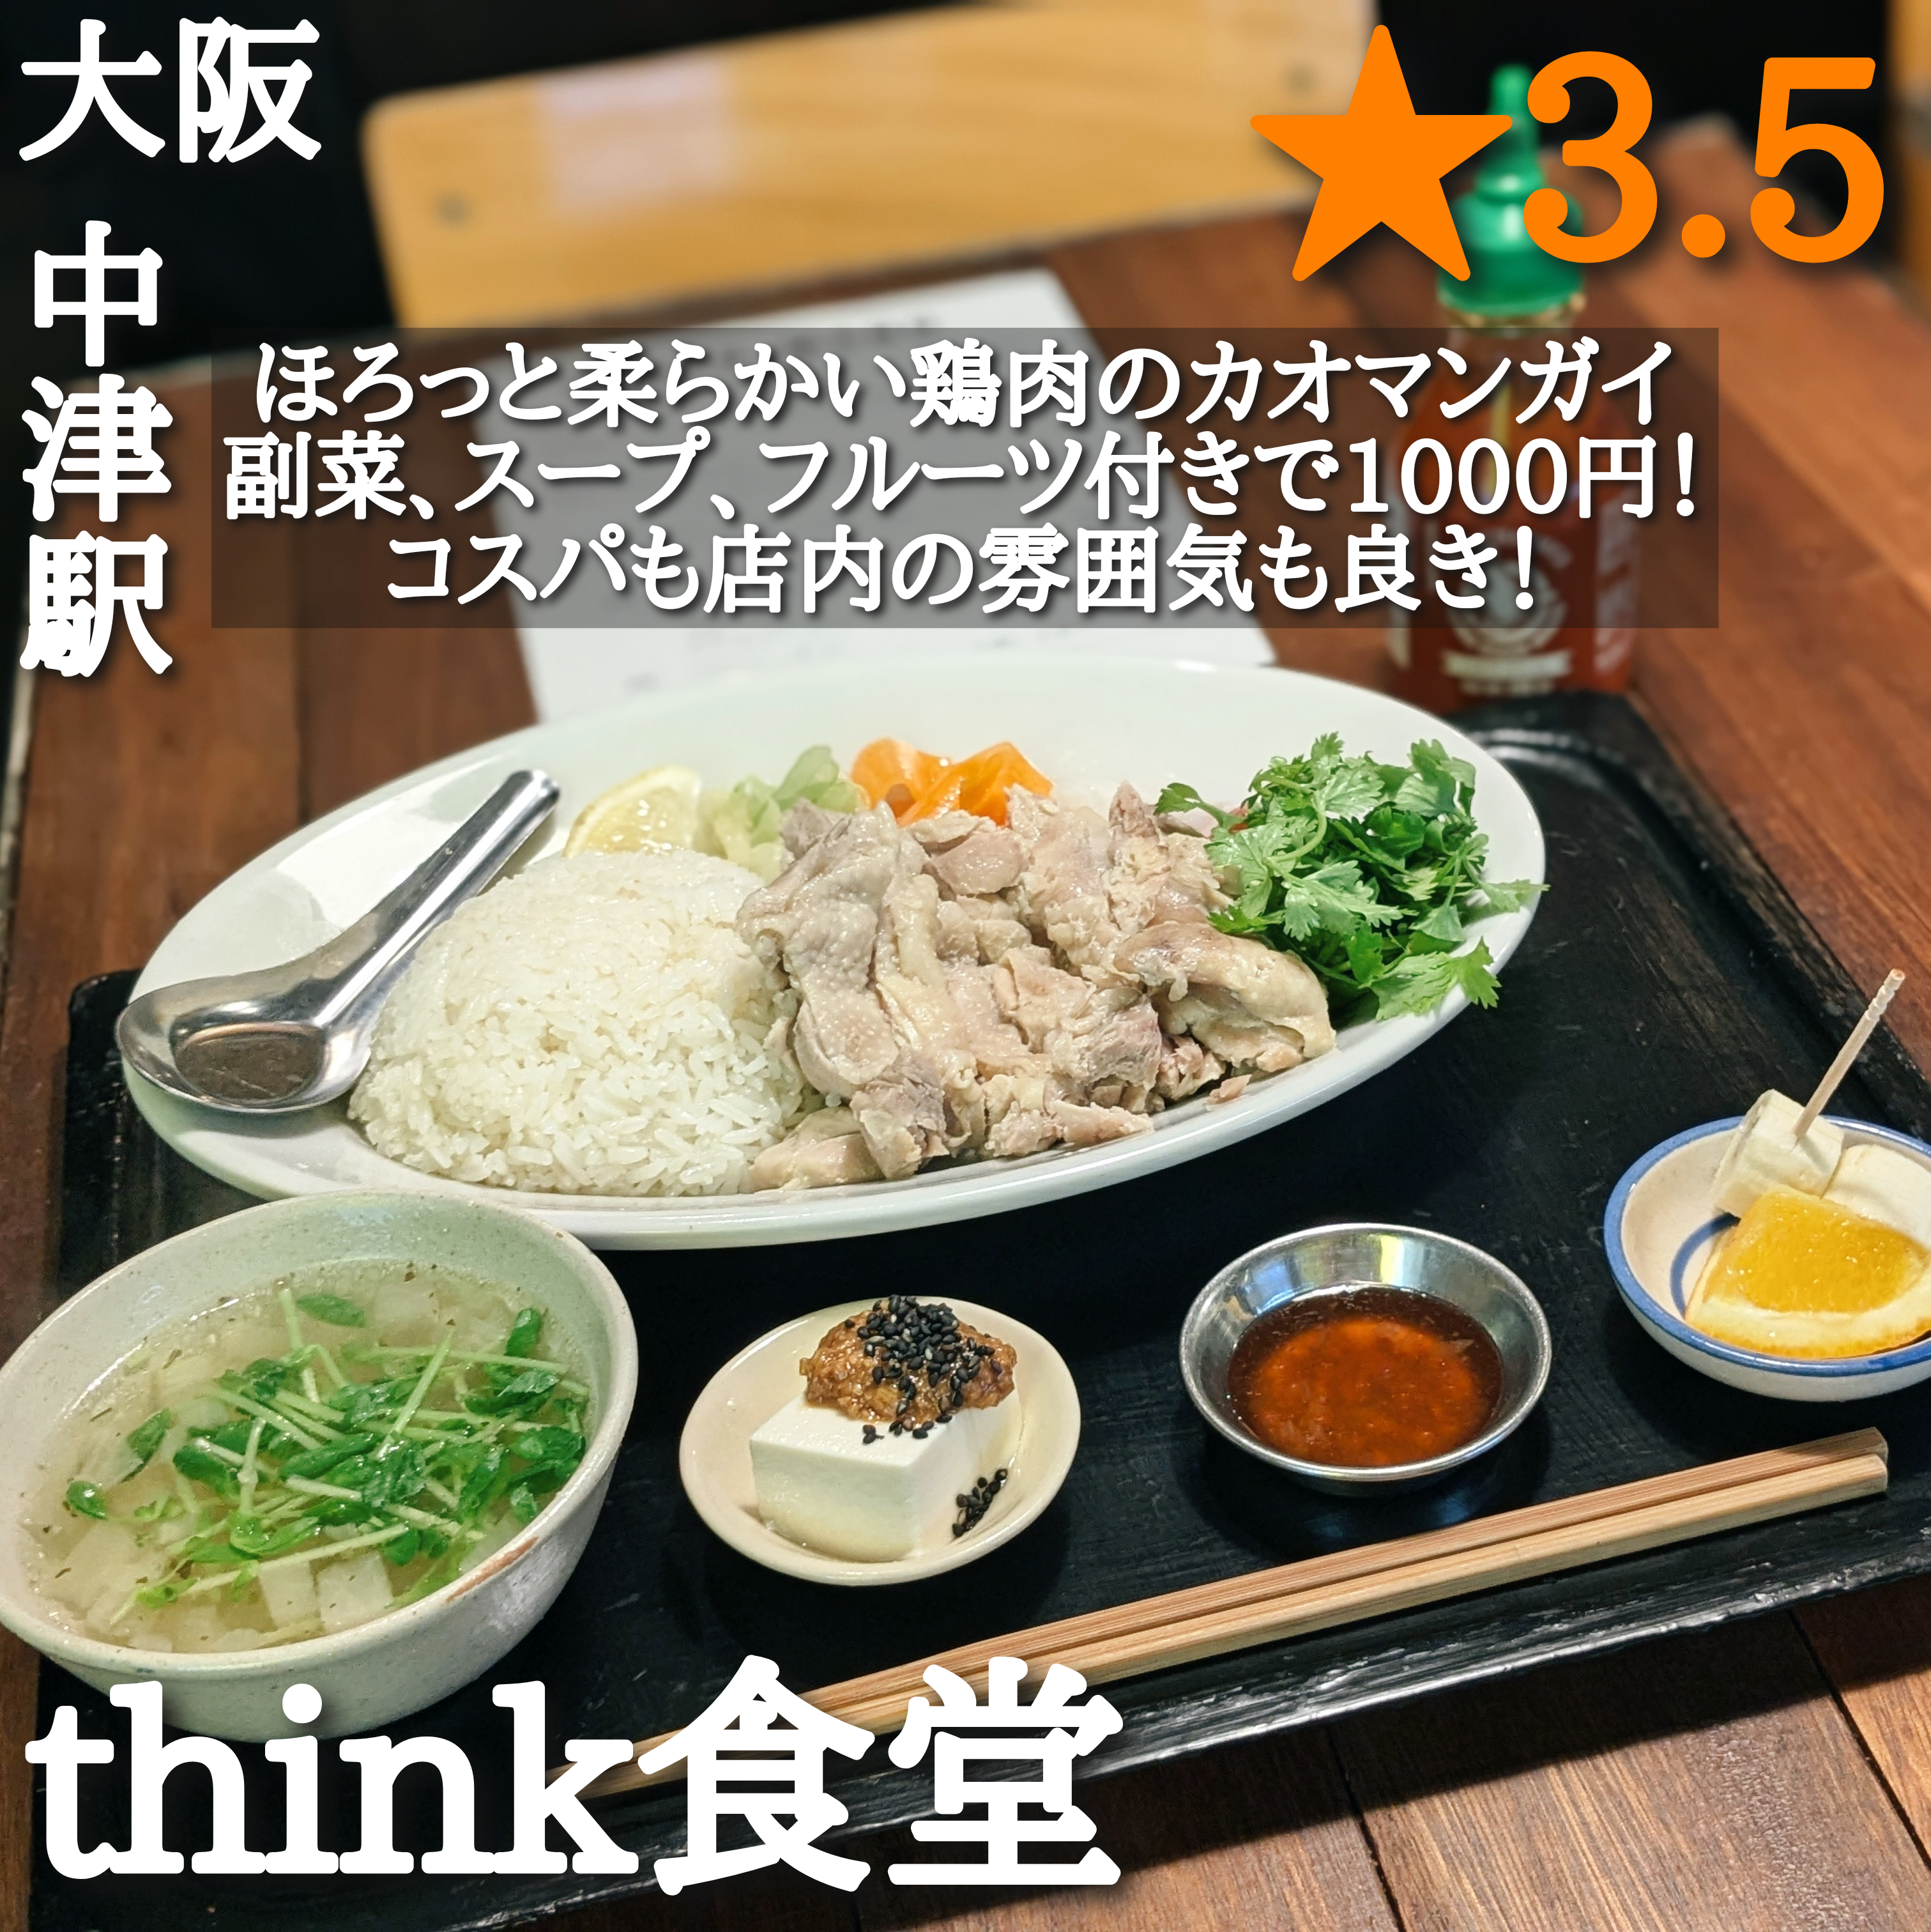 think食堂(中津駅・アジア料理)